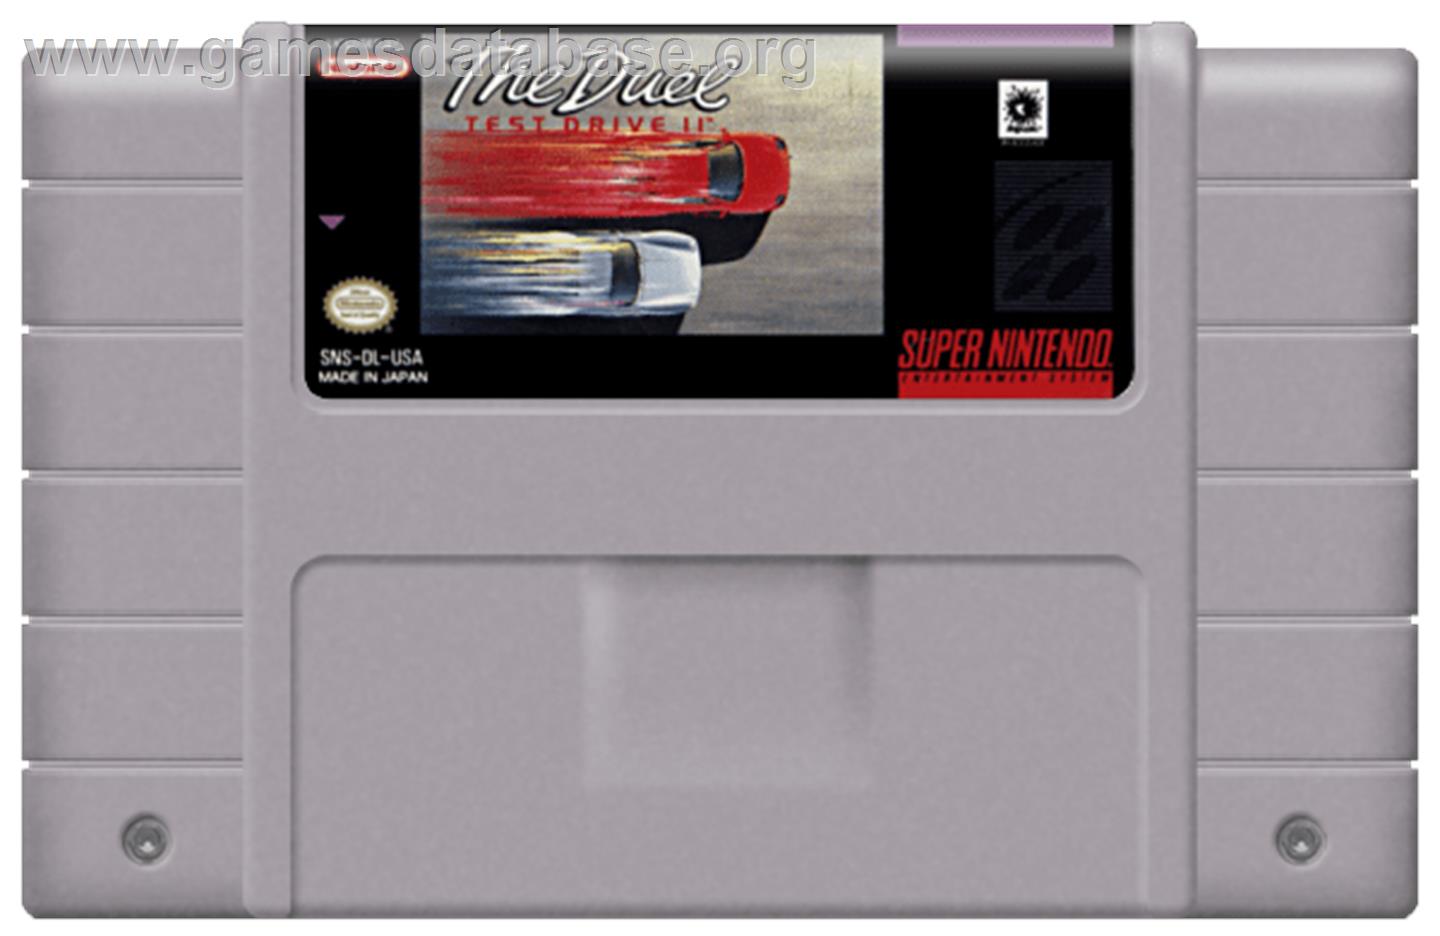 The Duel: Test Drive II - Nintendo SNES - Artwork - Cartridge